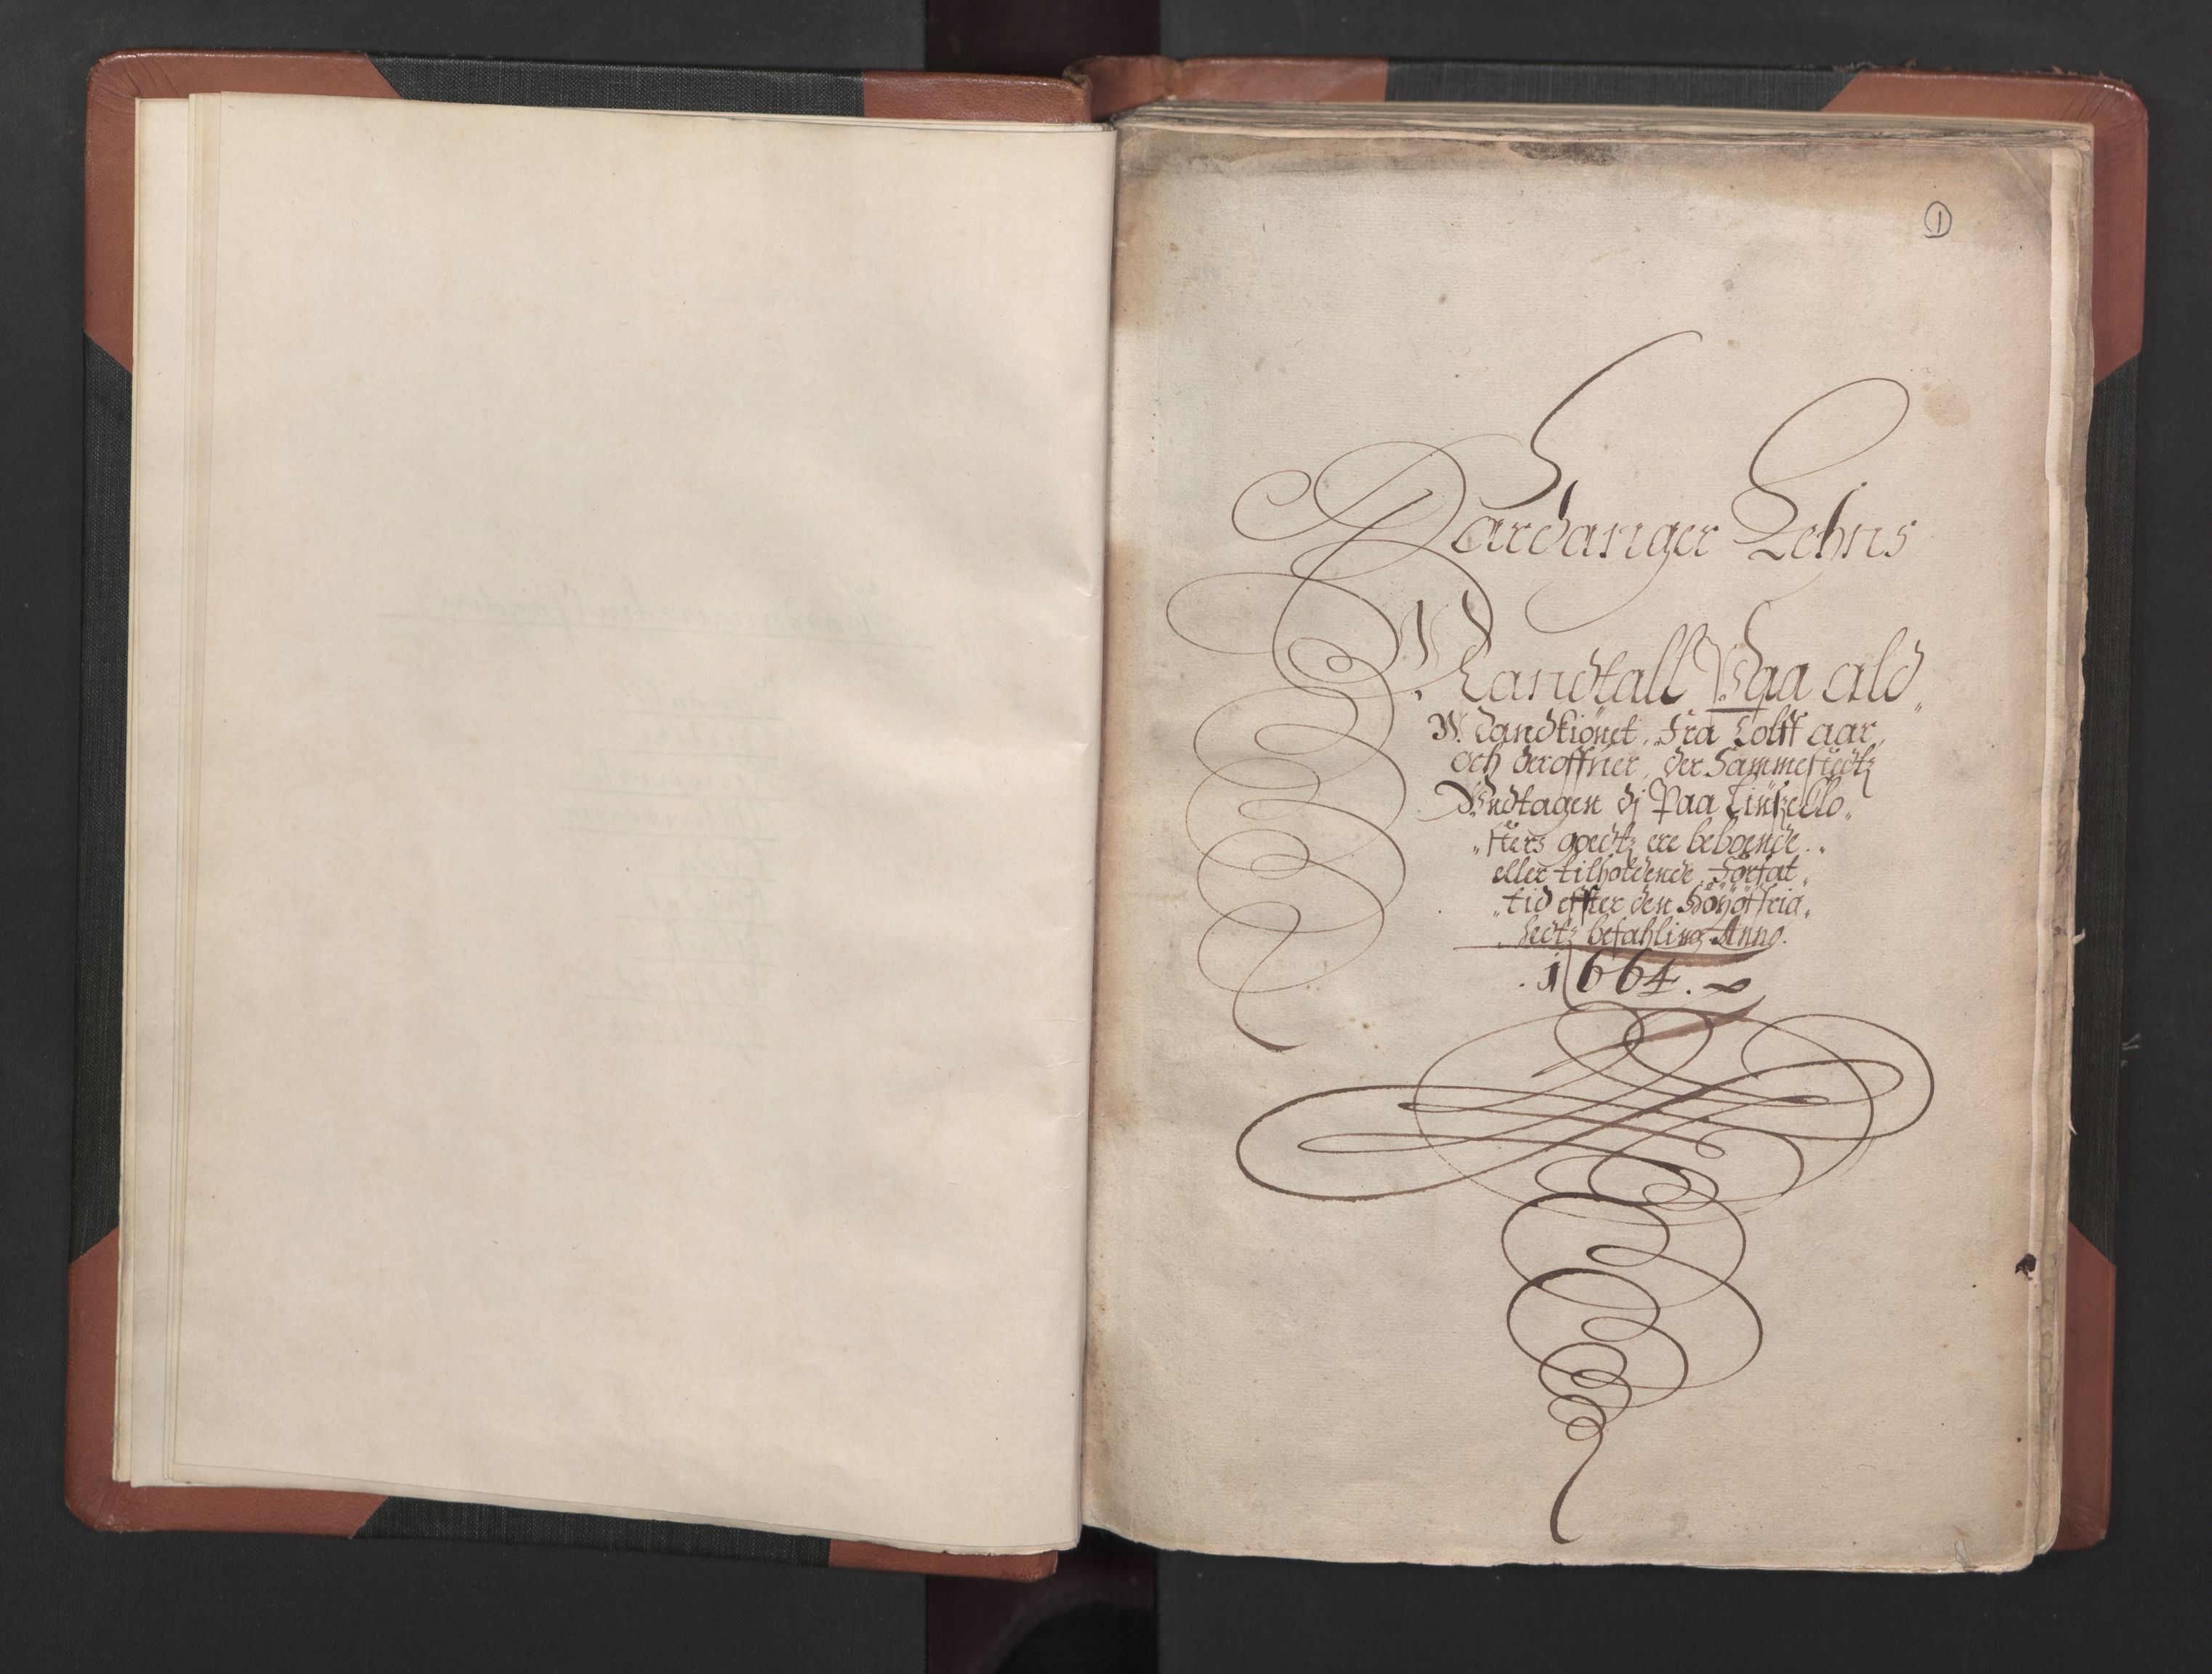 RA, Fogdenes og sorenskrivernes manntall 1664-1666, nr. 14: Hardanger len, Ytre Sogn fogderi og Indre Sogn fogderi, 1664-1665, s. 1